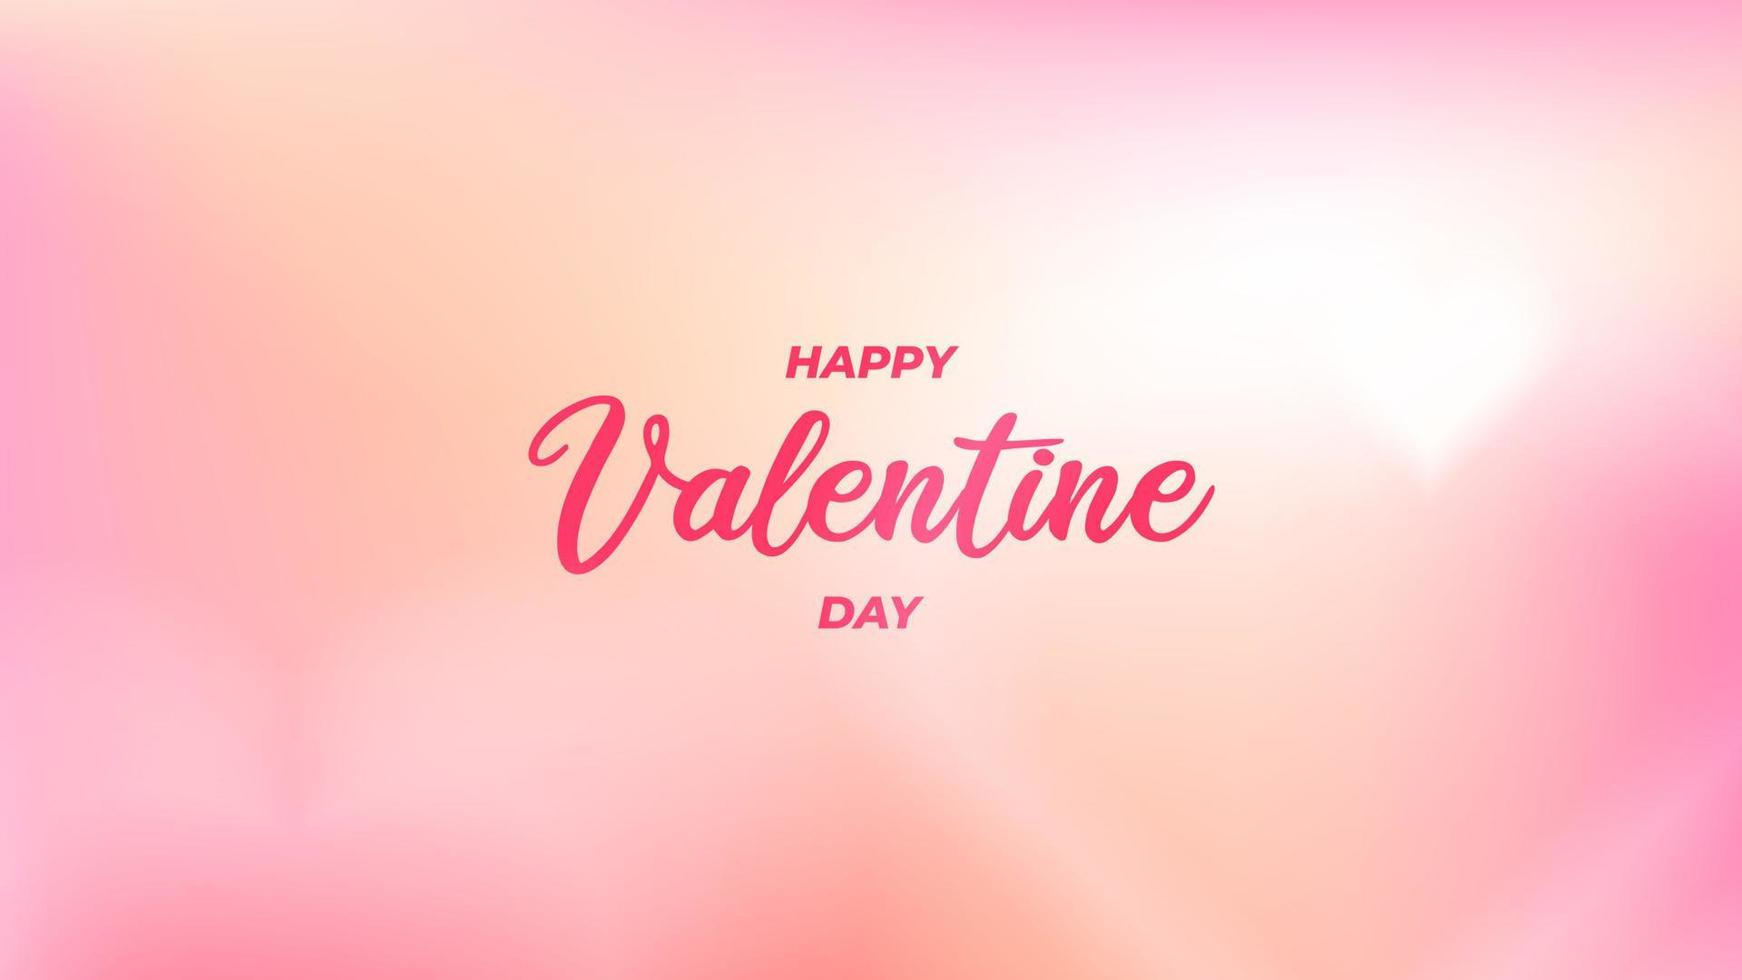 Happy valentinde day gradient background vector